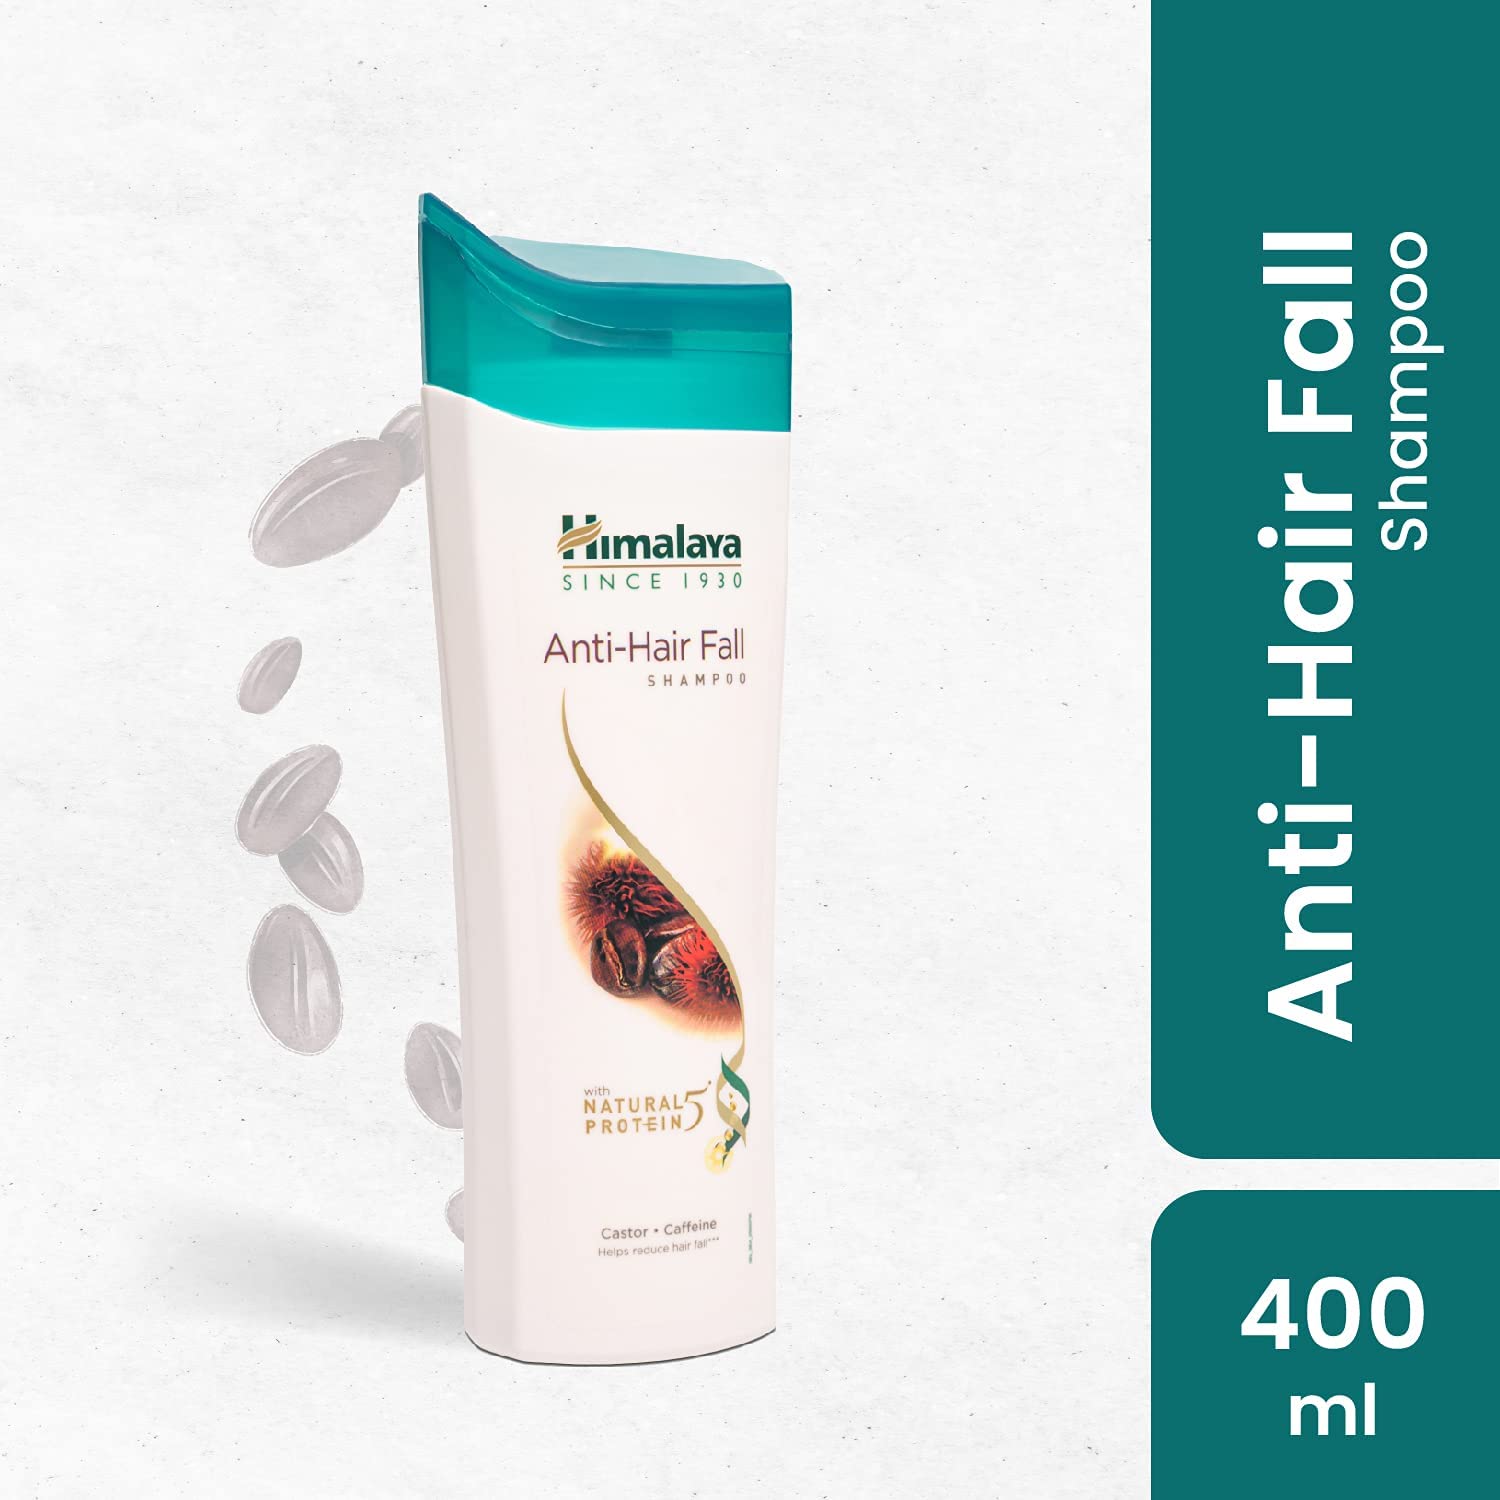 Himalaya Anti-Hair Fall Shampoo - 400 ml (Pack of 2)